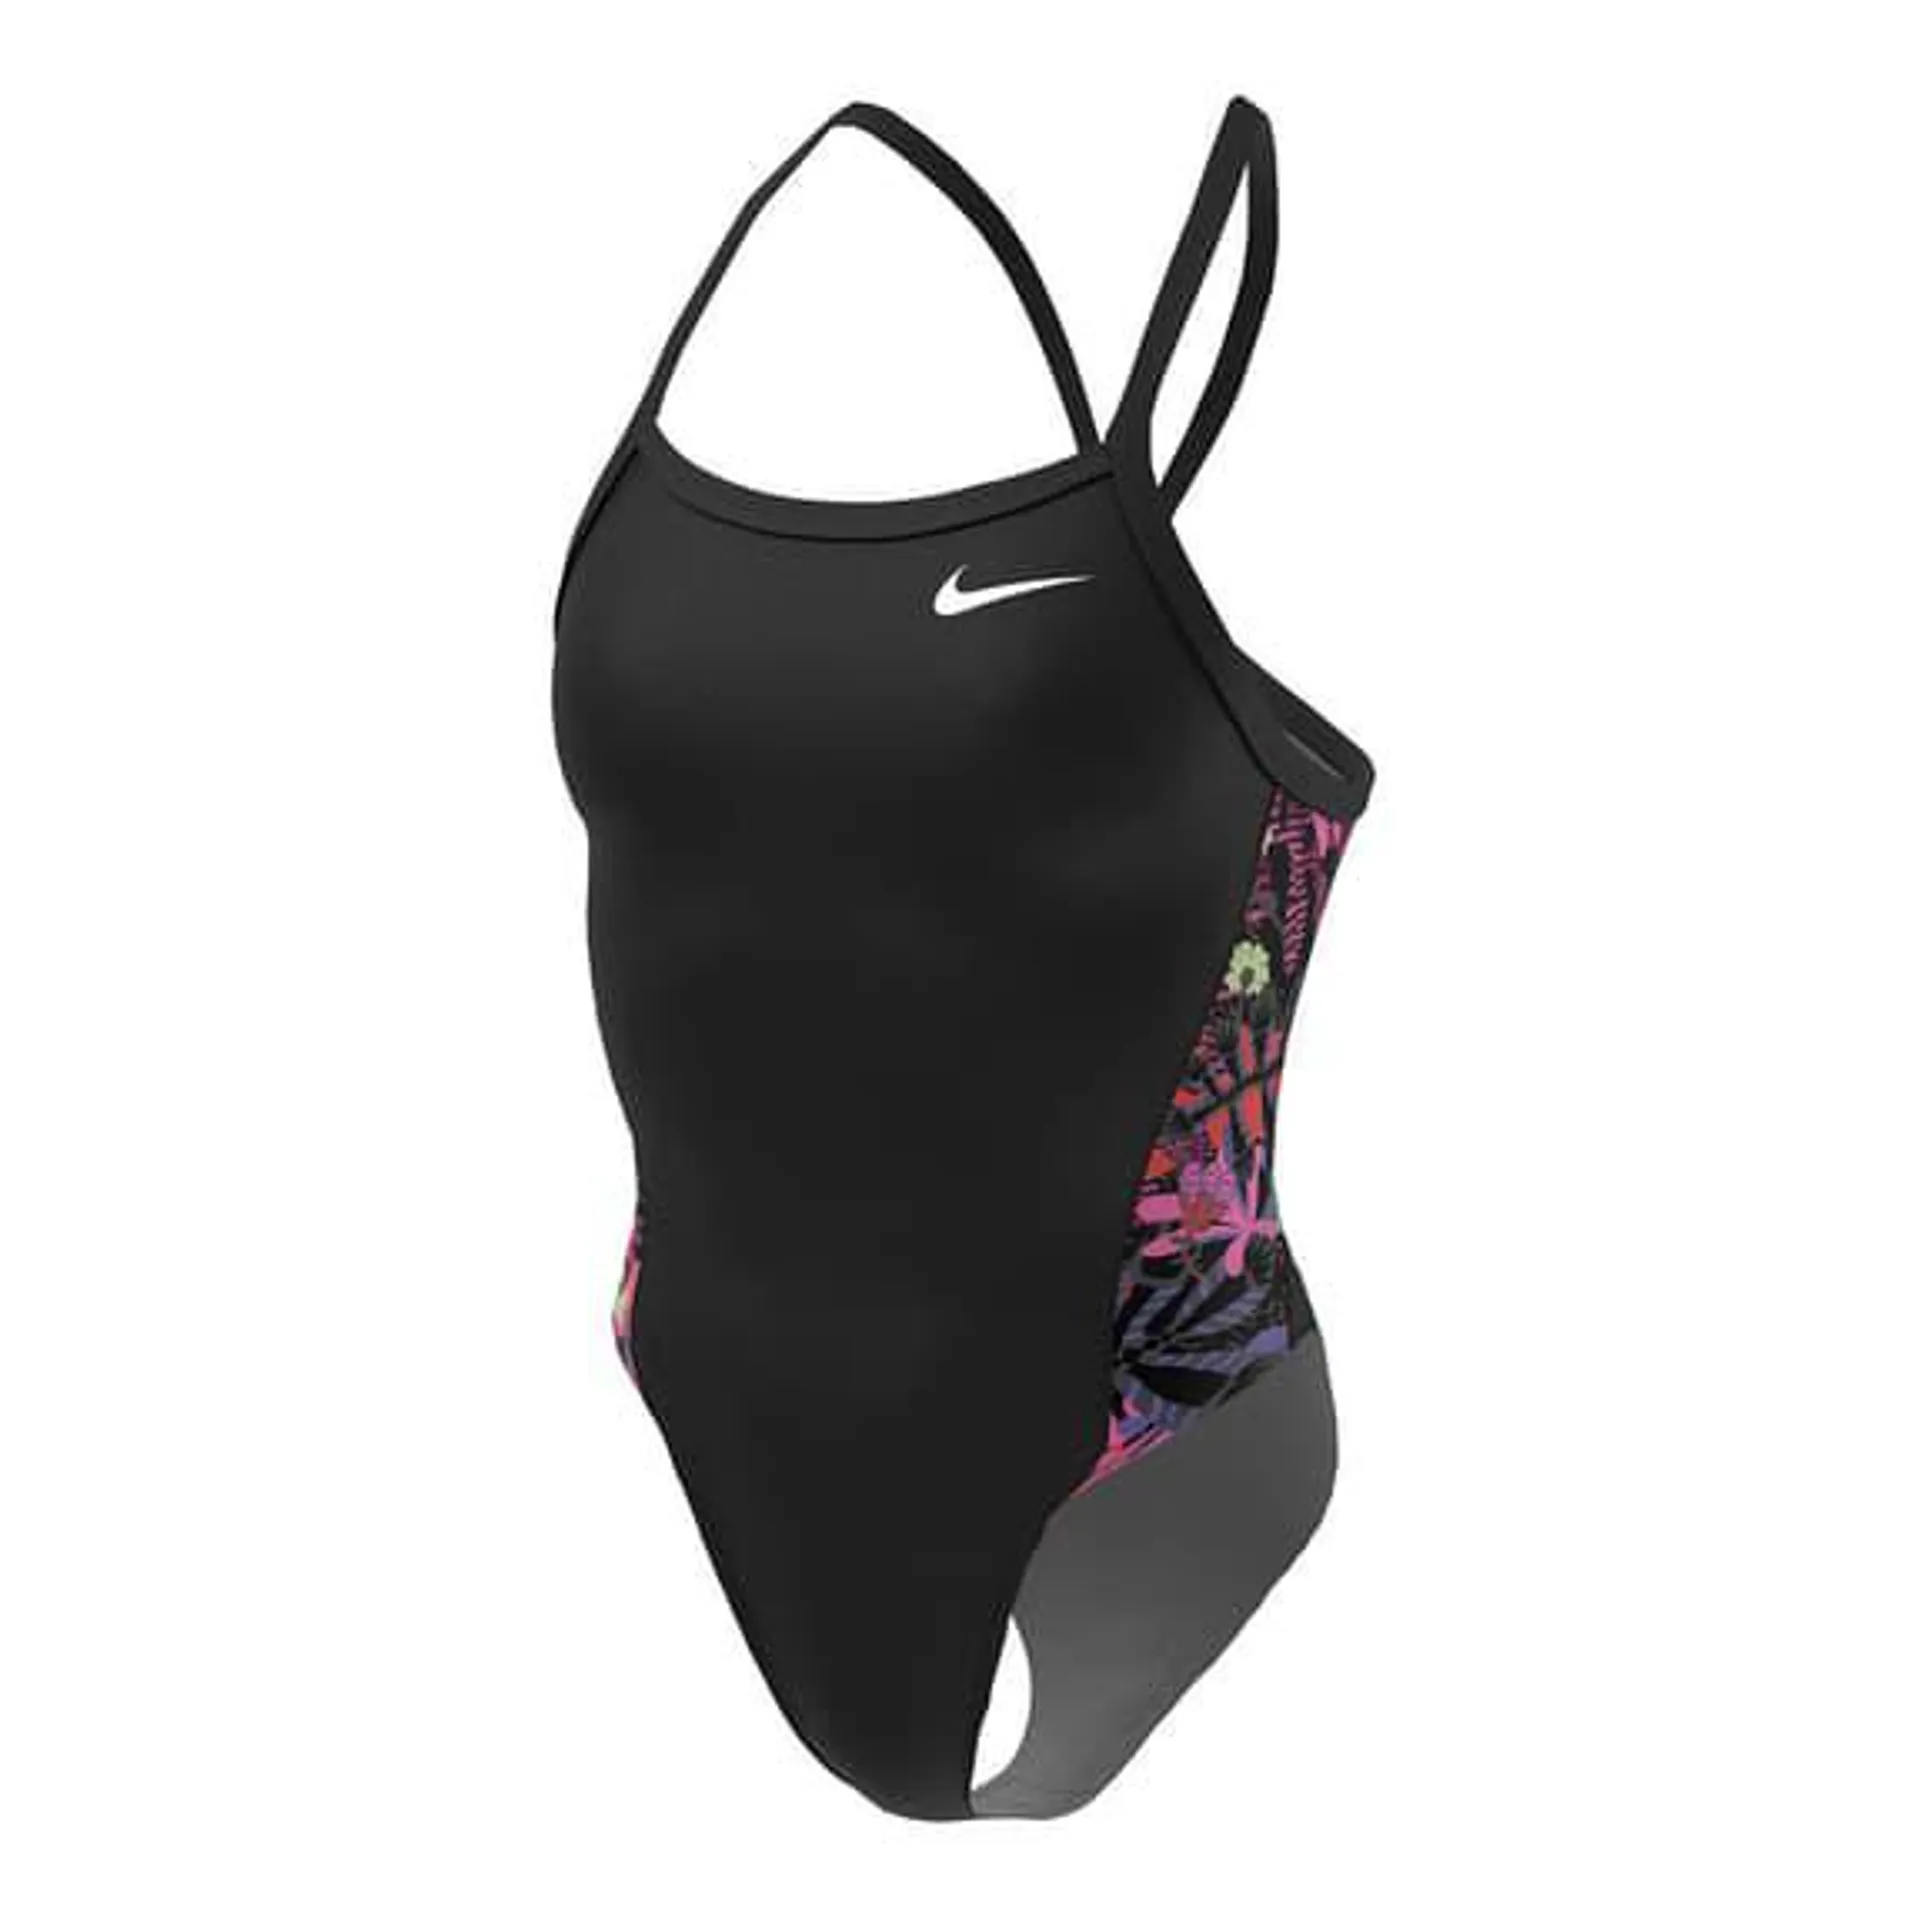 Maillot de bain Nike Swim Racerback noir rouge femme